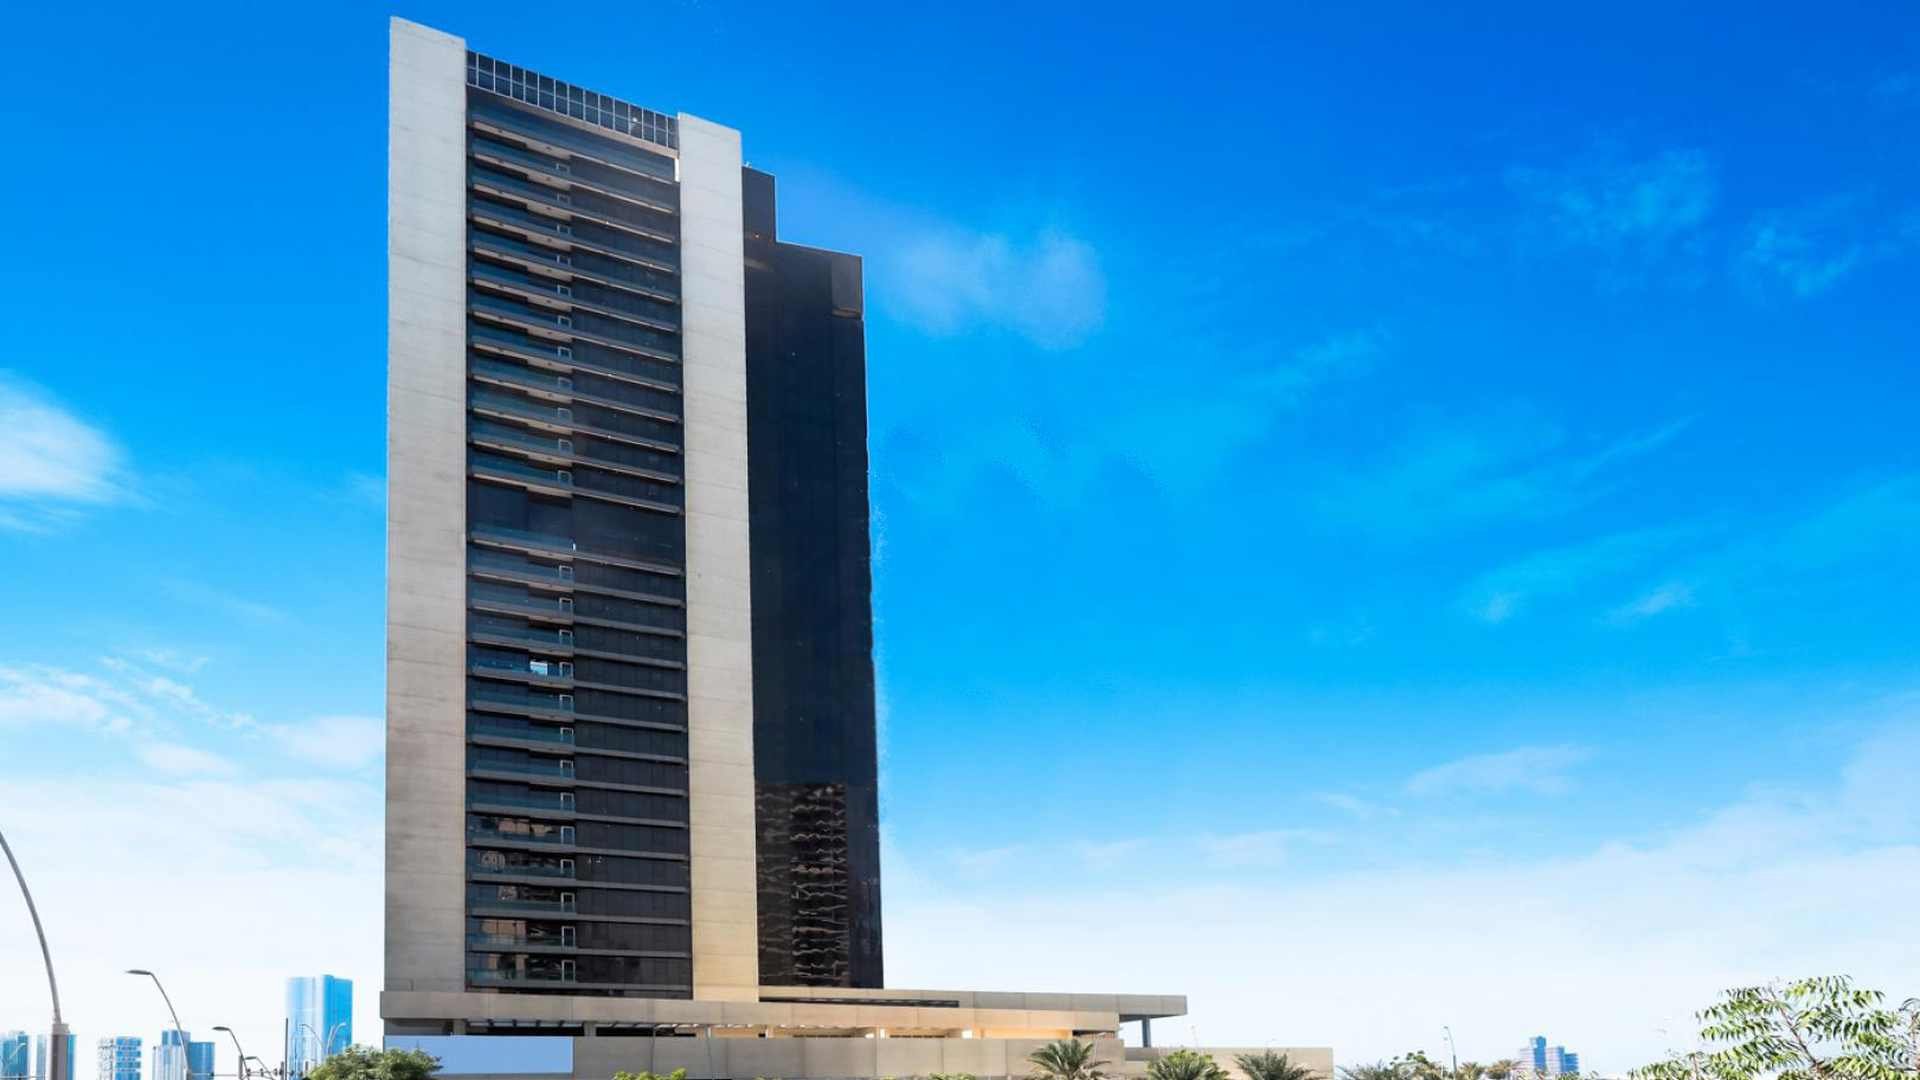 AL BEED TOWER by Al Beed Investment Group in Al Reem Island, Abu Dhabi, UAE